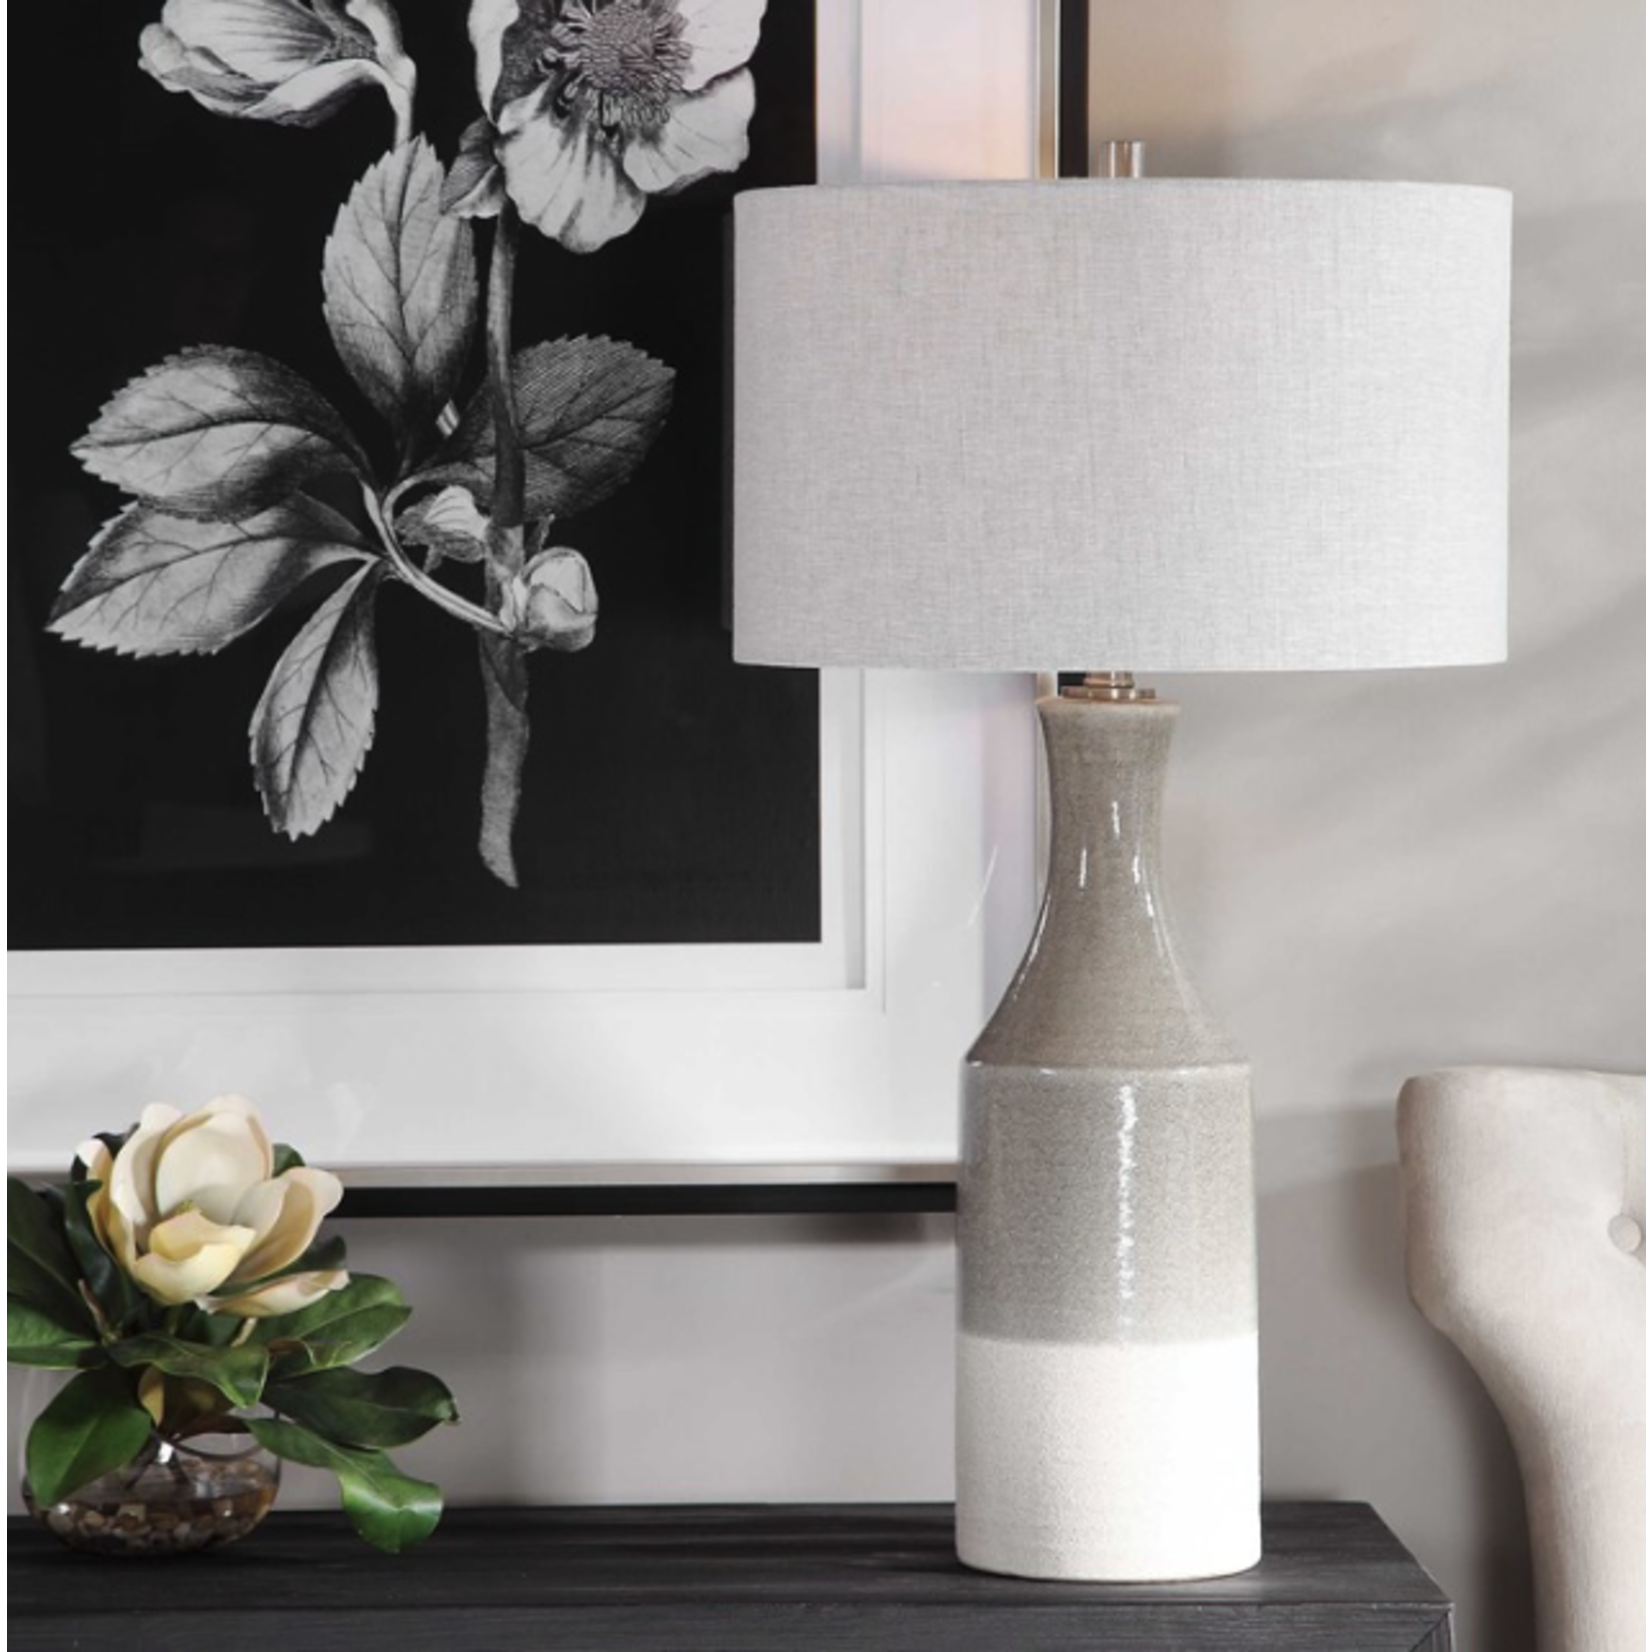 31" Uttermost Savin White & Grey Table Lamp